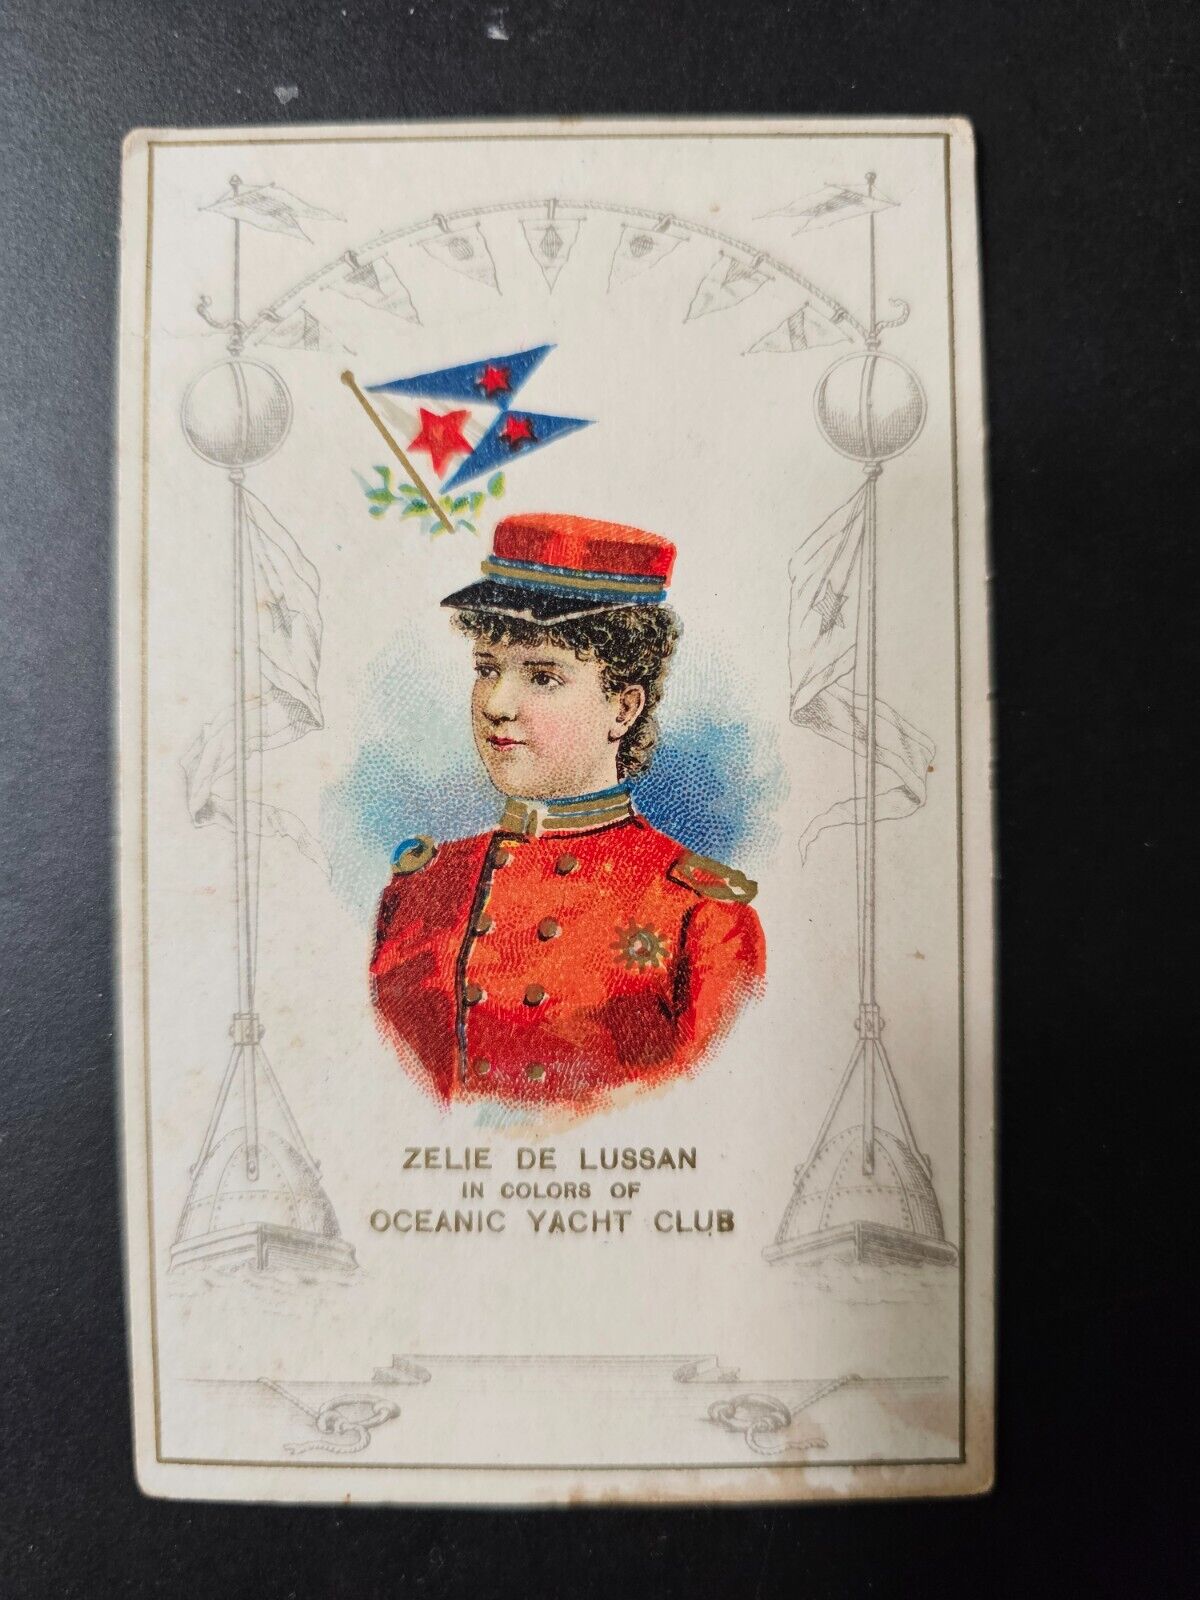 1880s Oceanic Yacht Club opera singer Zelie de Lussan -tobacco trade card